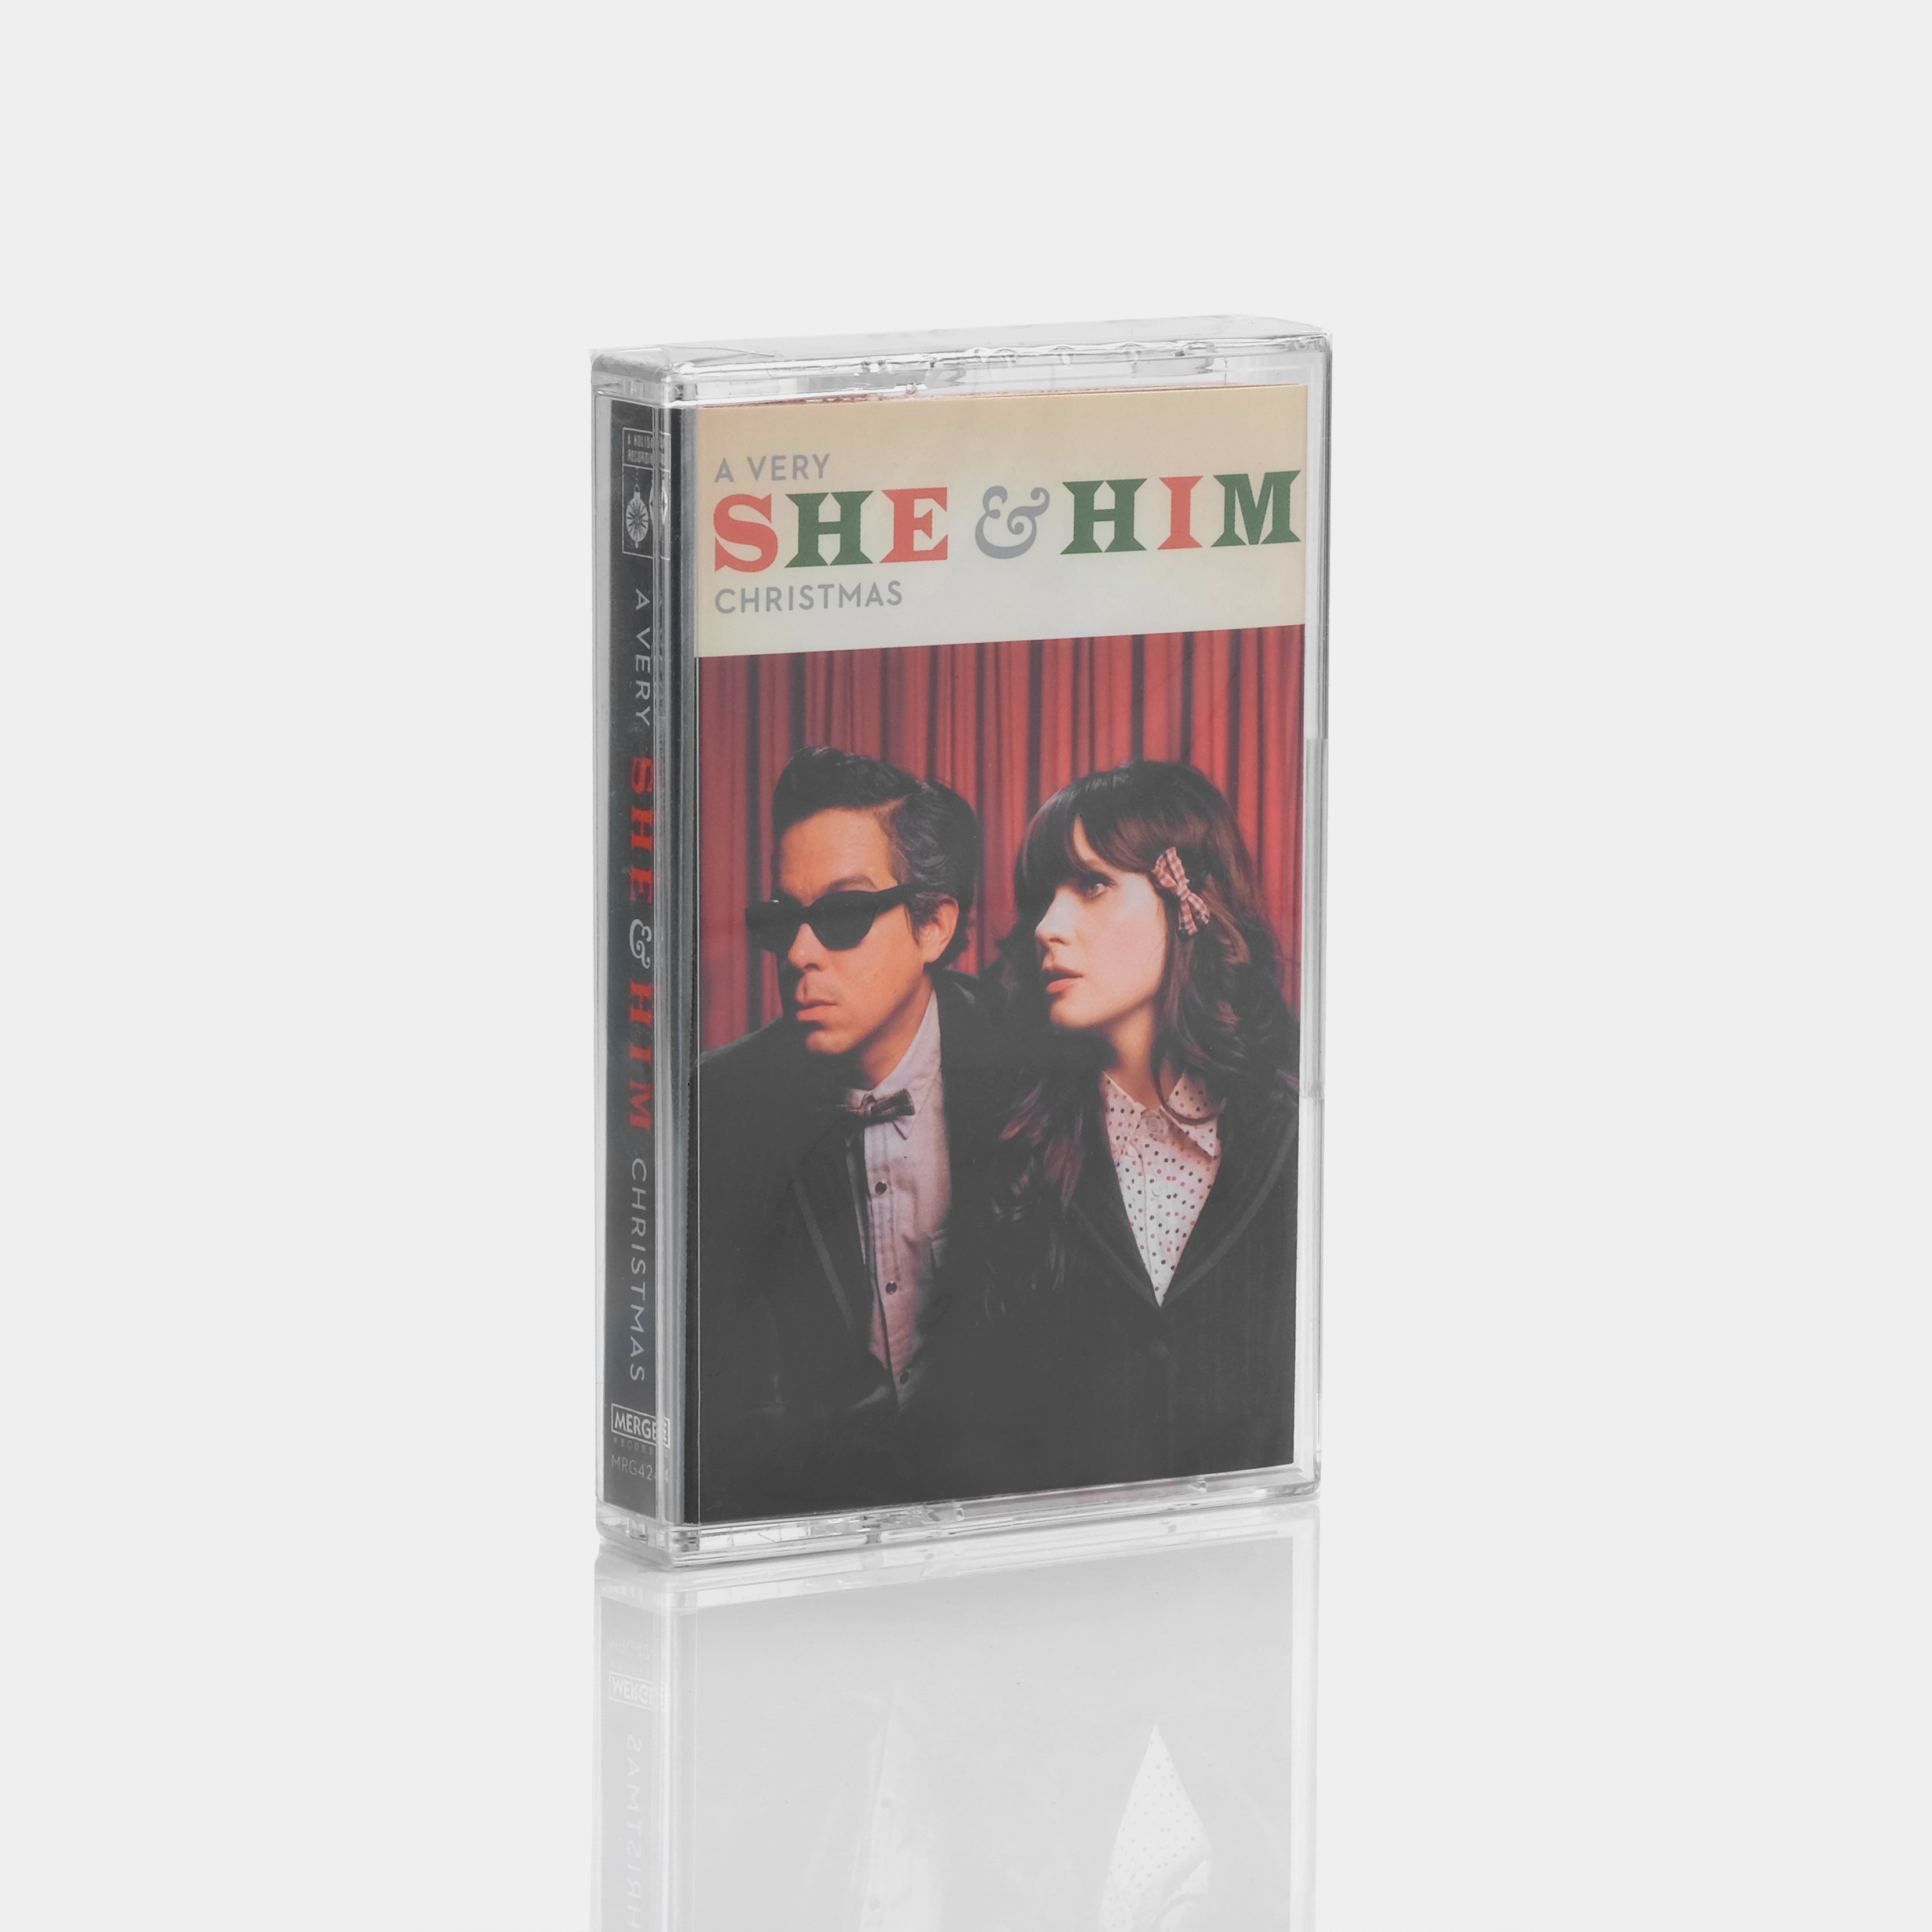 She & Him - A Very She & Him Christmas (Retrospekt Exclusive) Cassette Tape